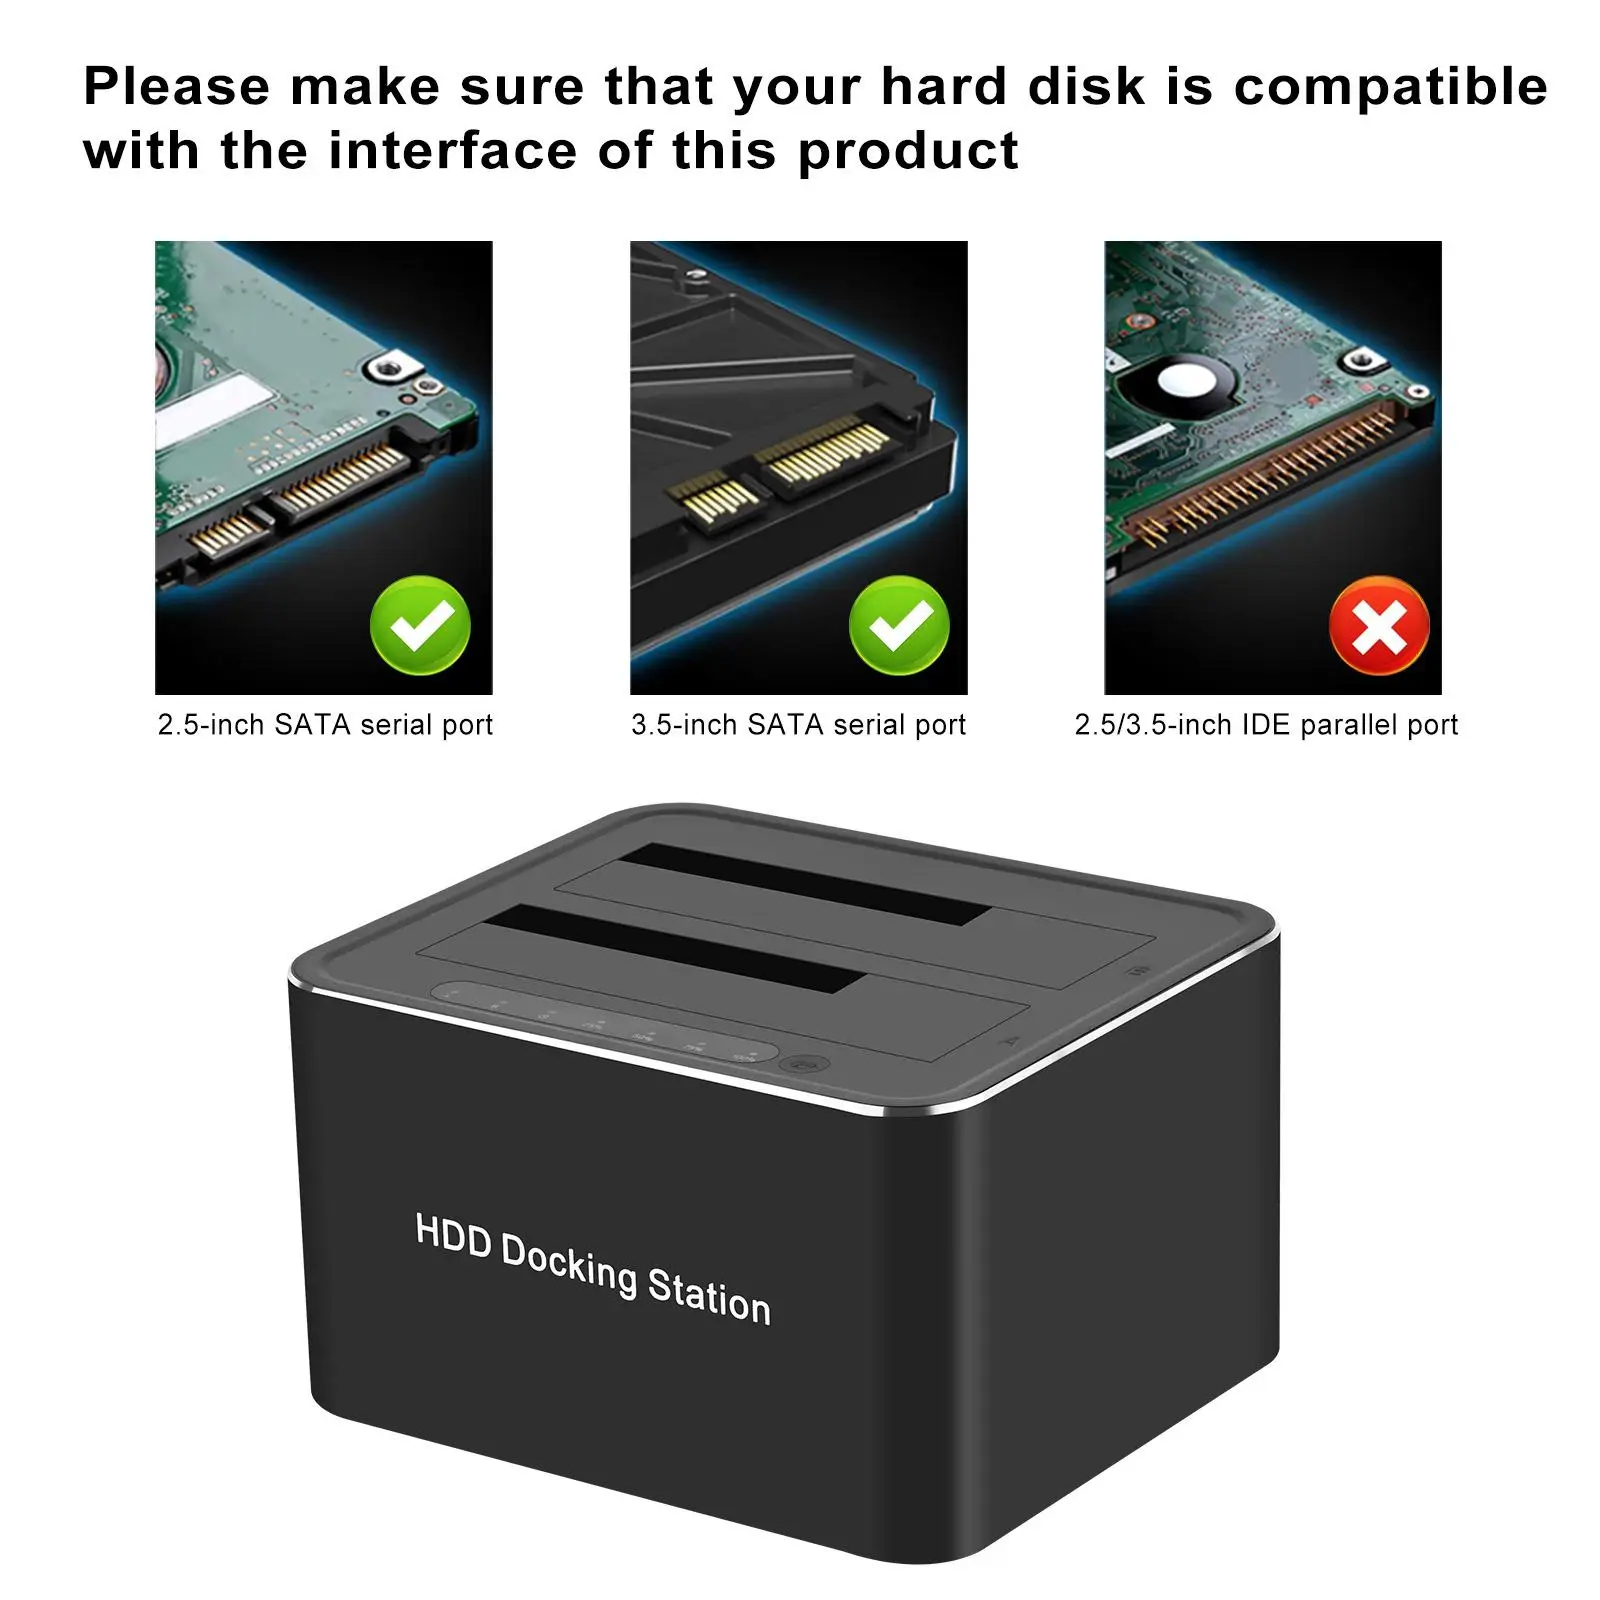 USB 3.0 to SATA Hard Drive Docking Station UK for 2.5